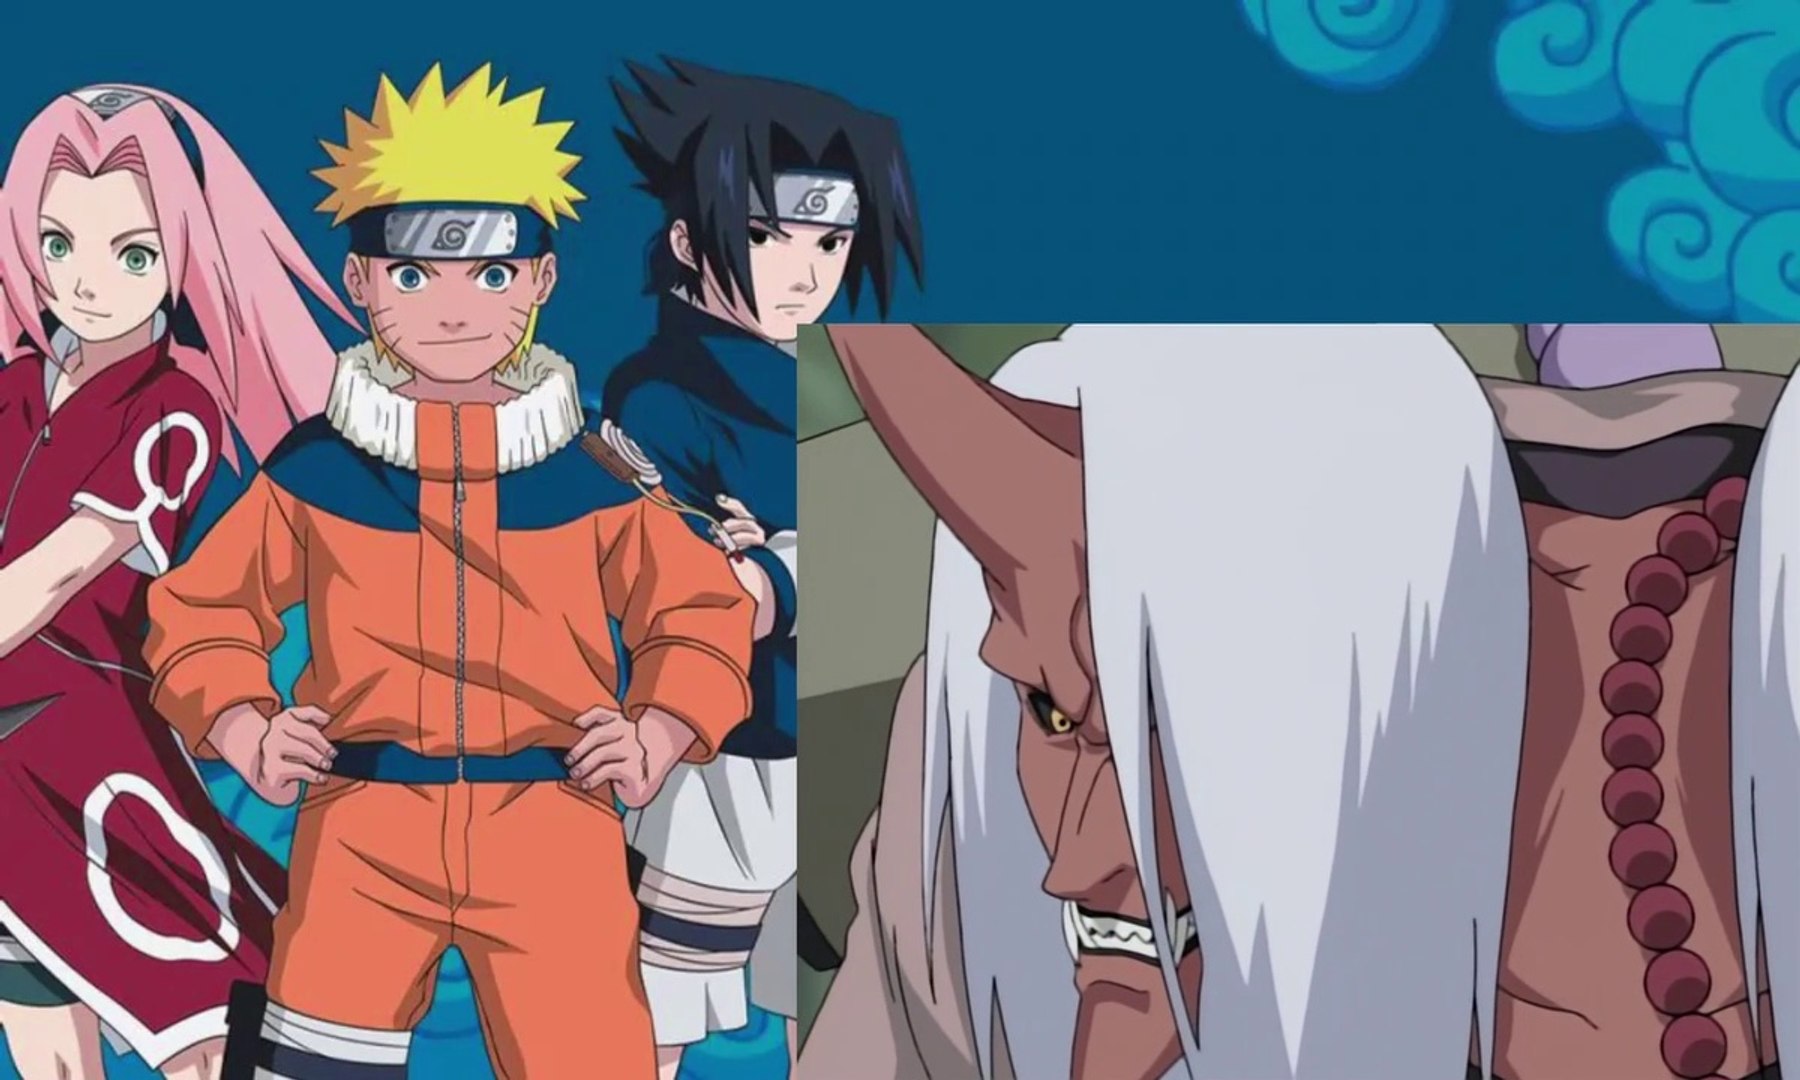 Naruto Shippuden Episode 1 Explained In हिंदी 